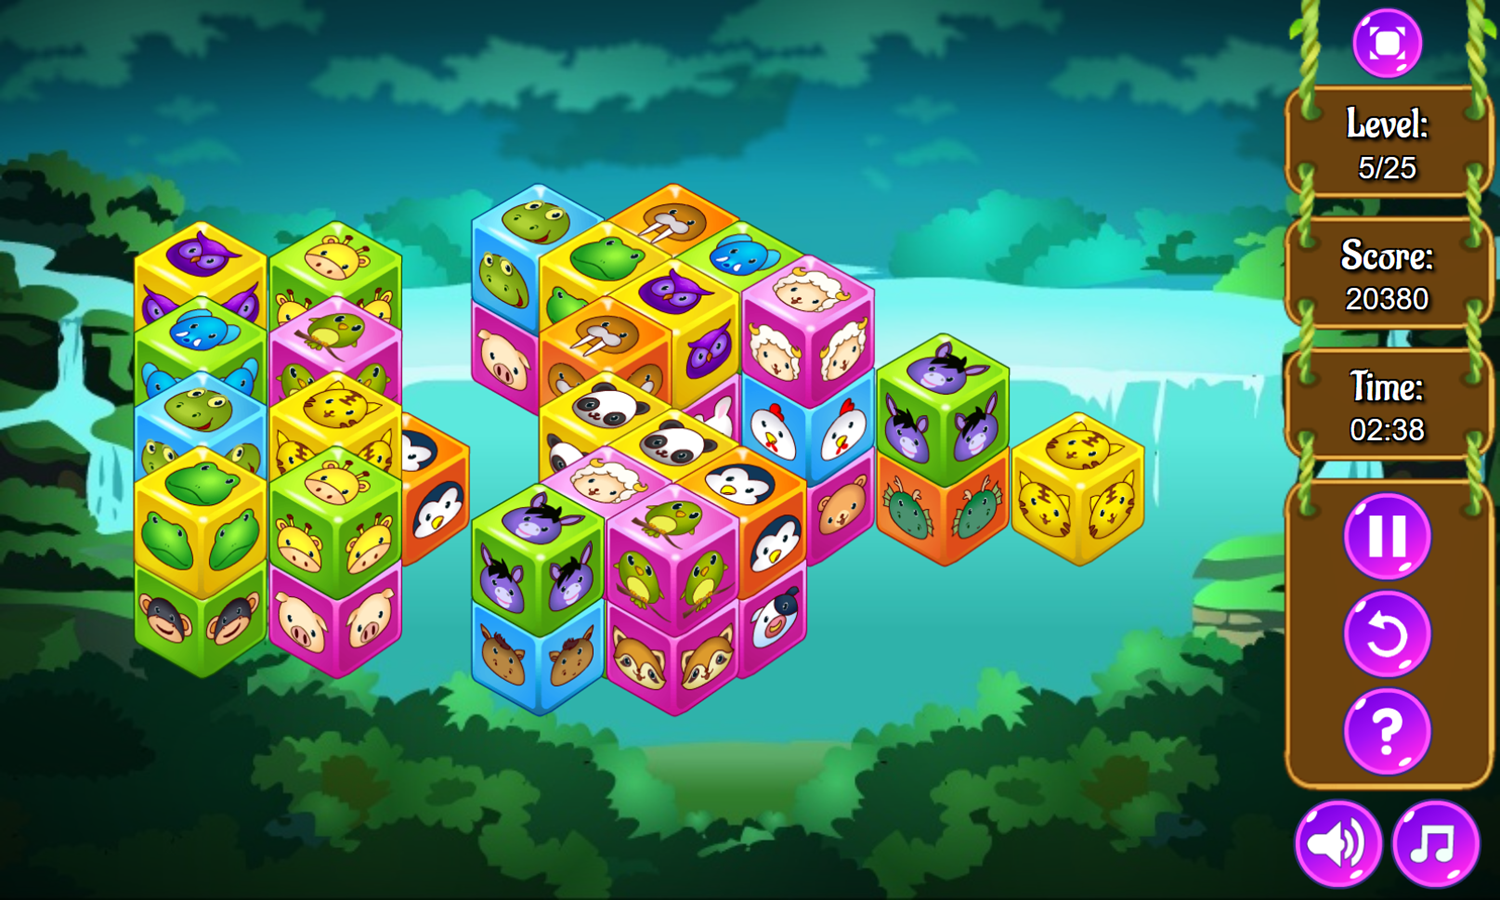 Cube Zoobies Game Level Progress Screenshot.